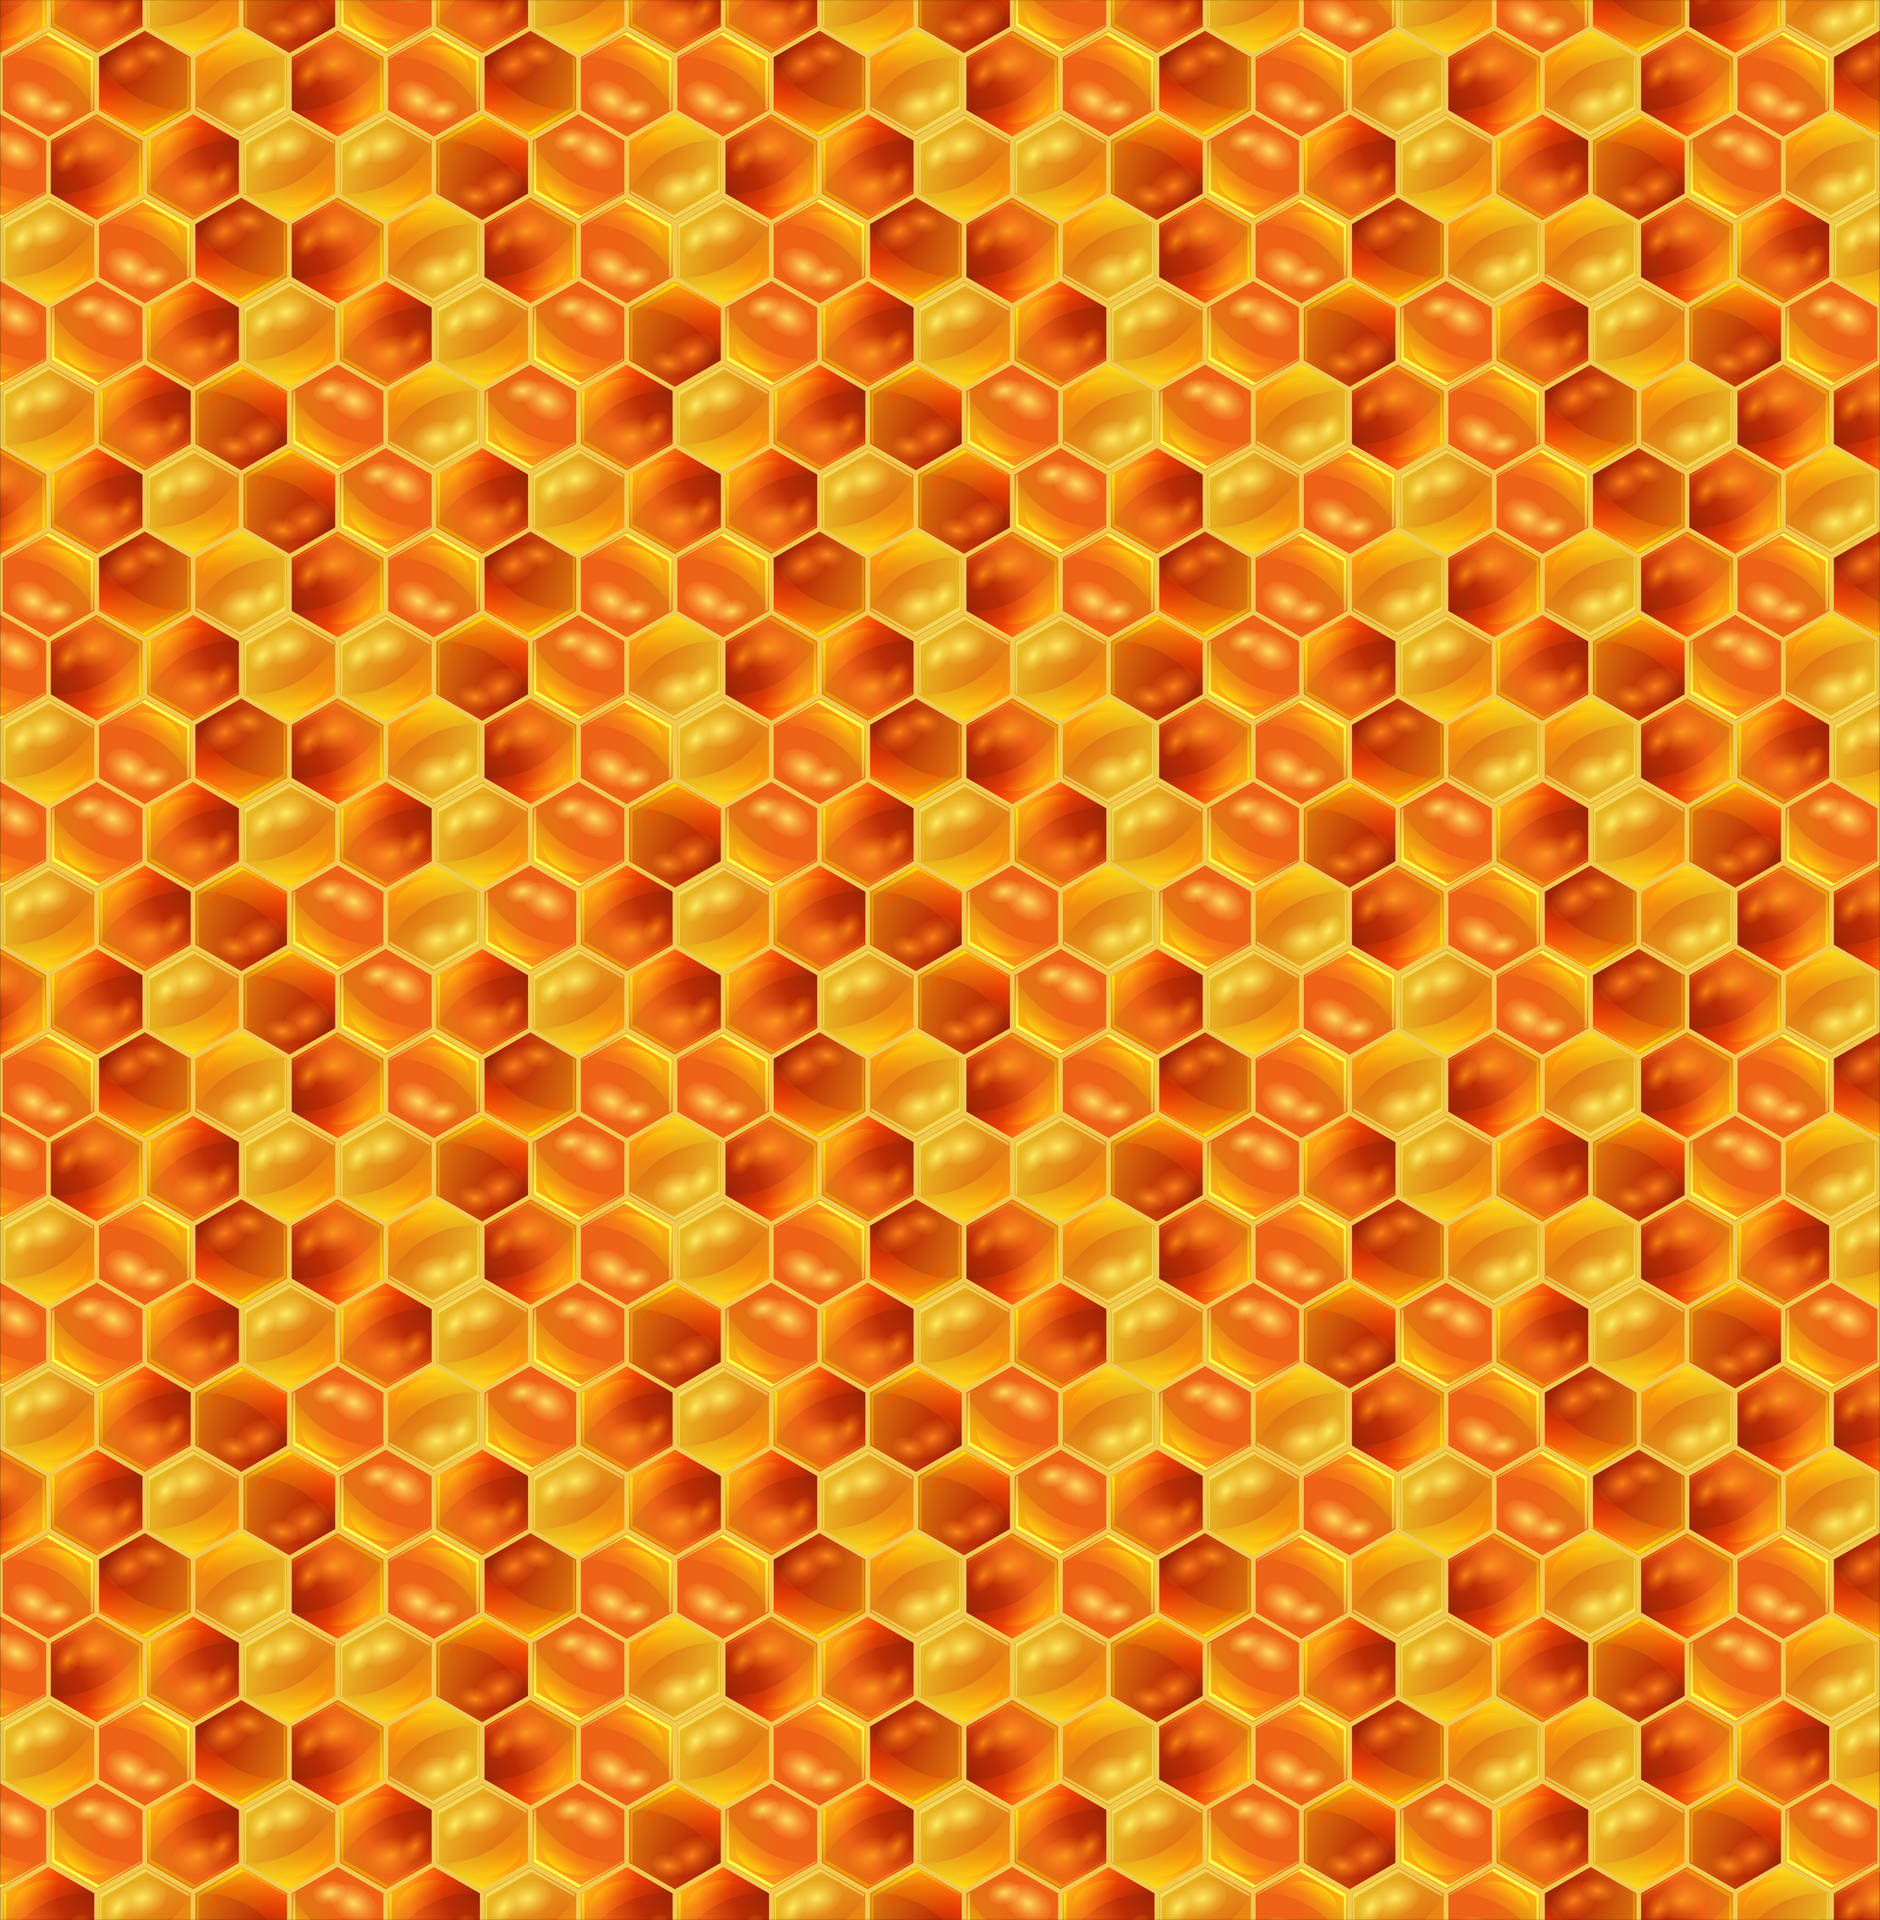 Honeycomb Digital Art Background